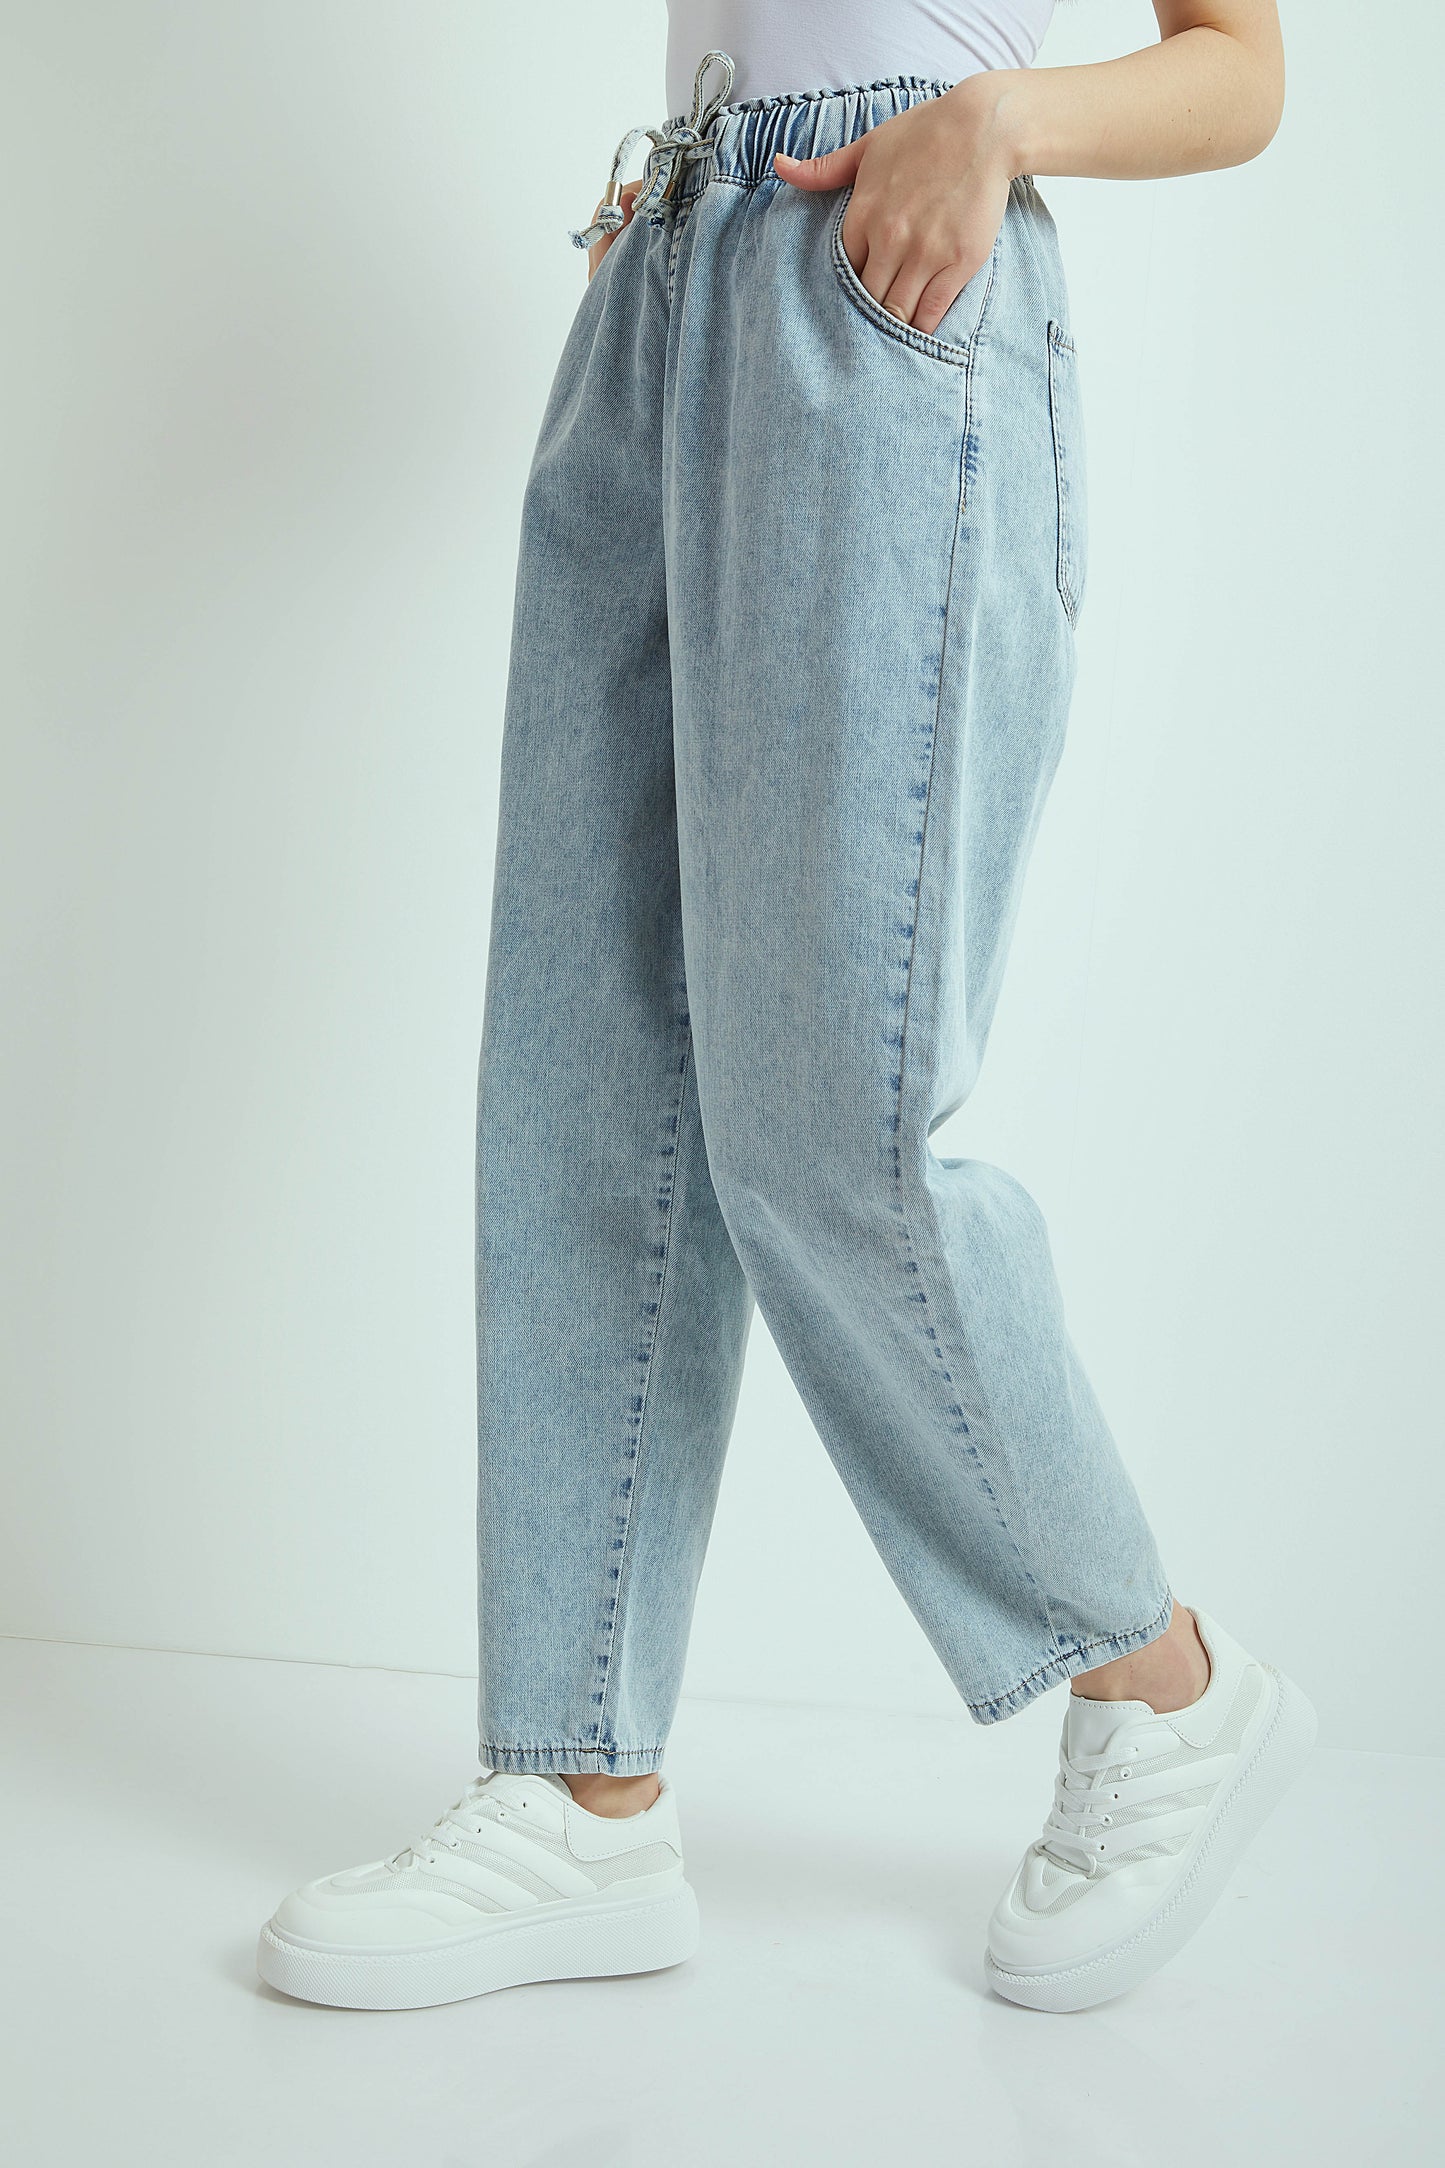 Jeans elastic waist - MoM Fit